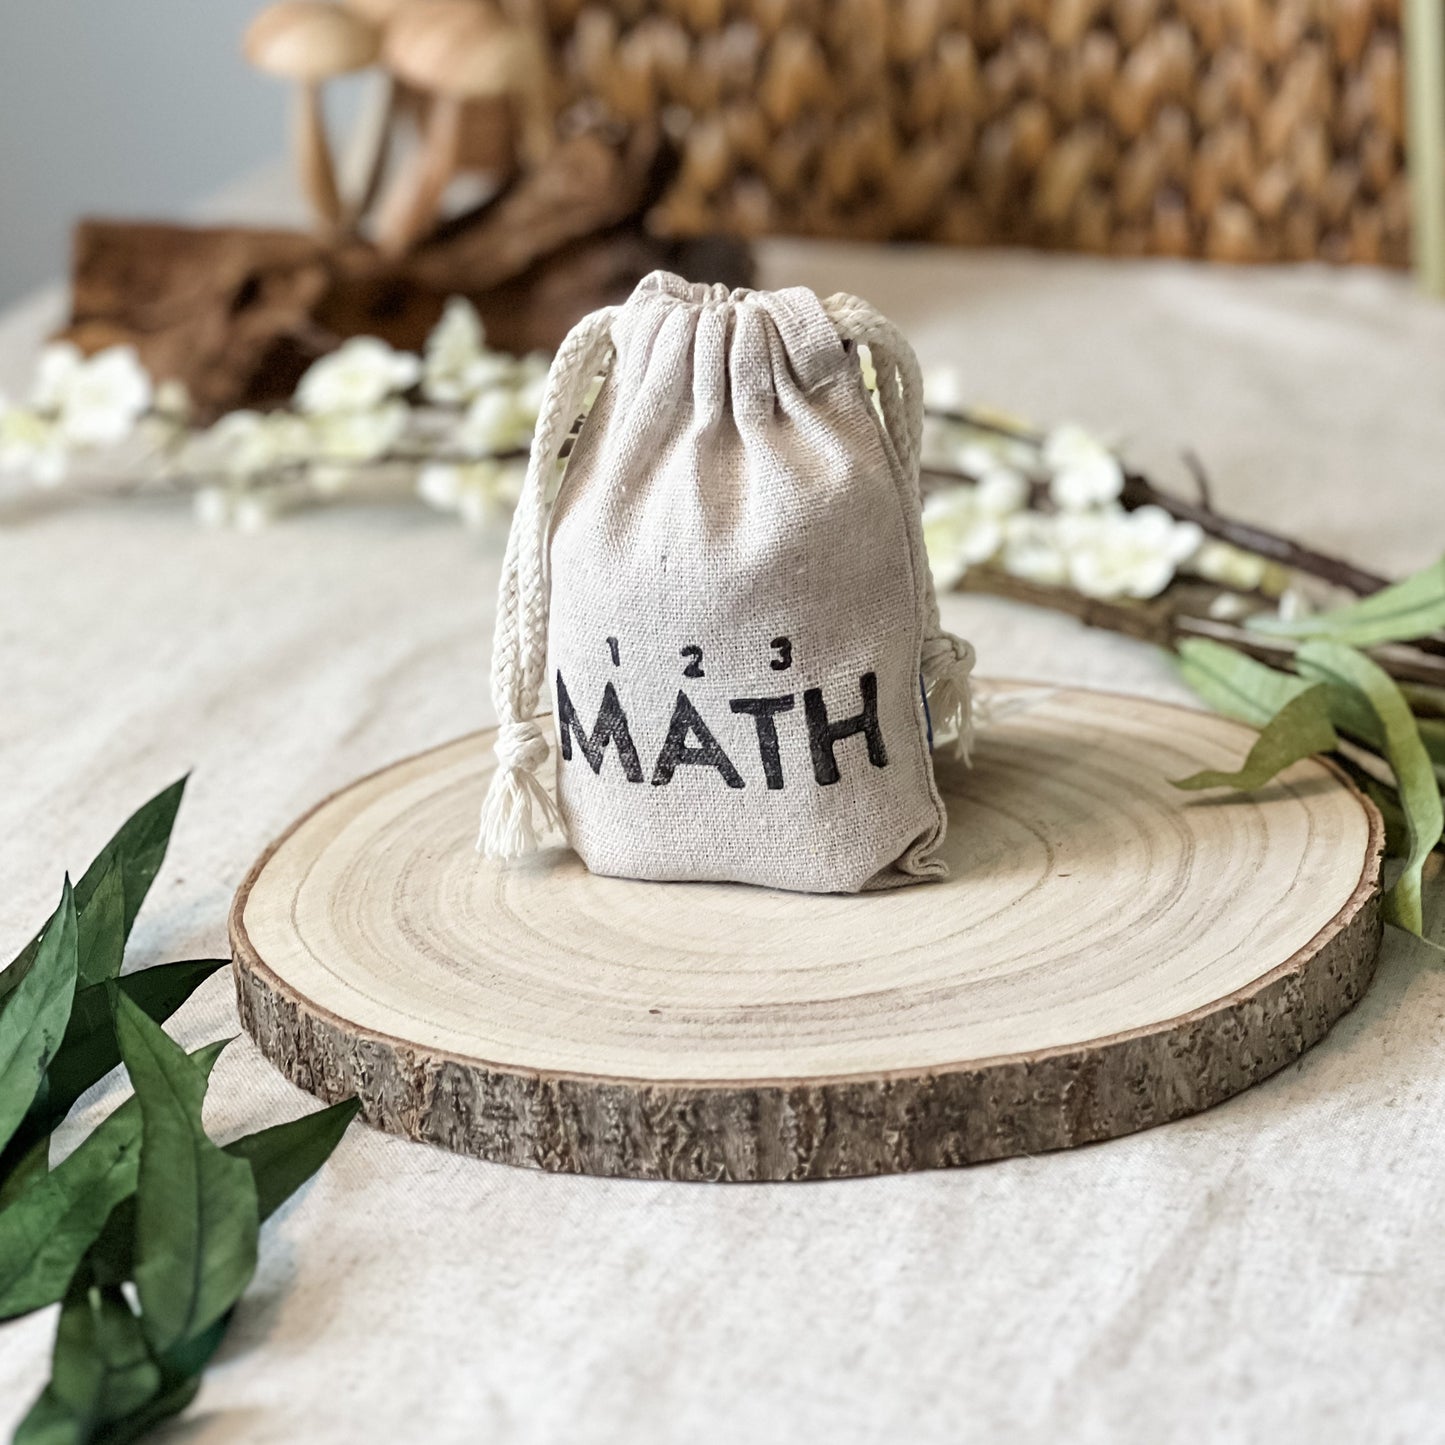 Math Manipulatives - Chickadees Wooden Toys